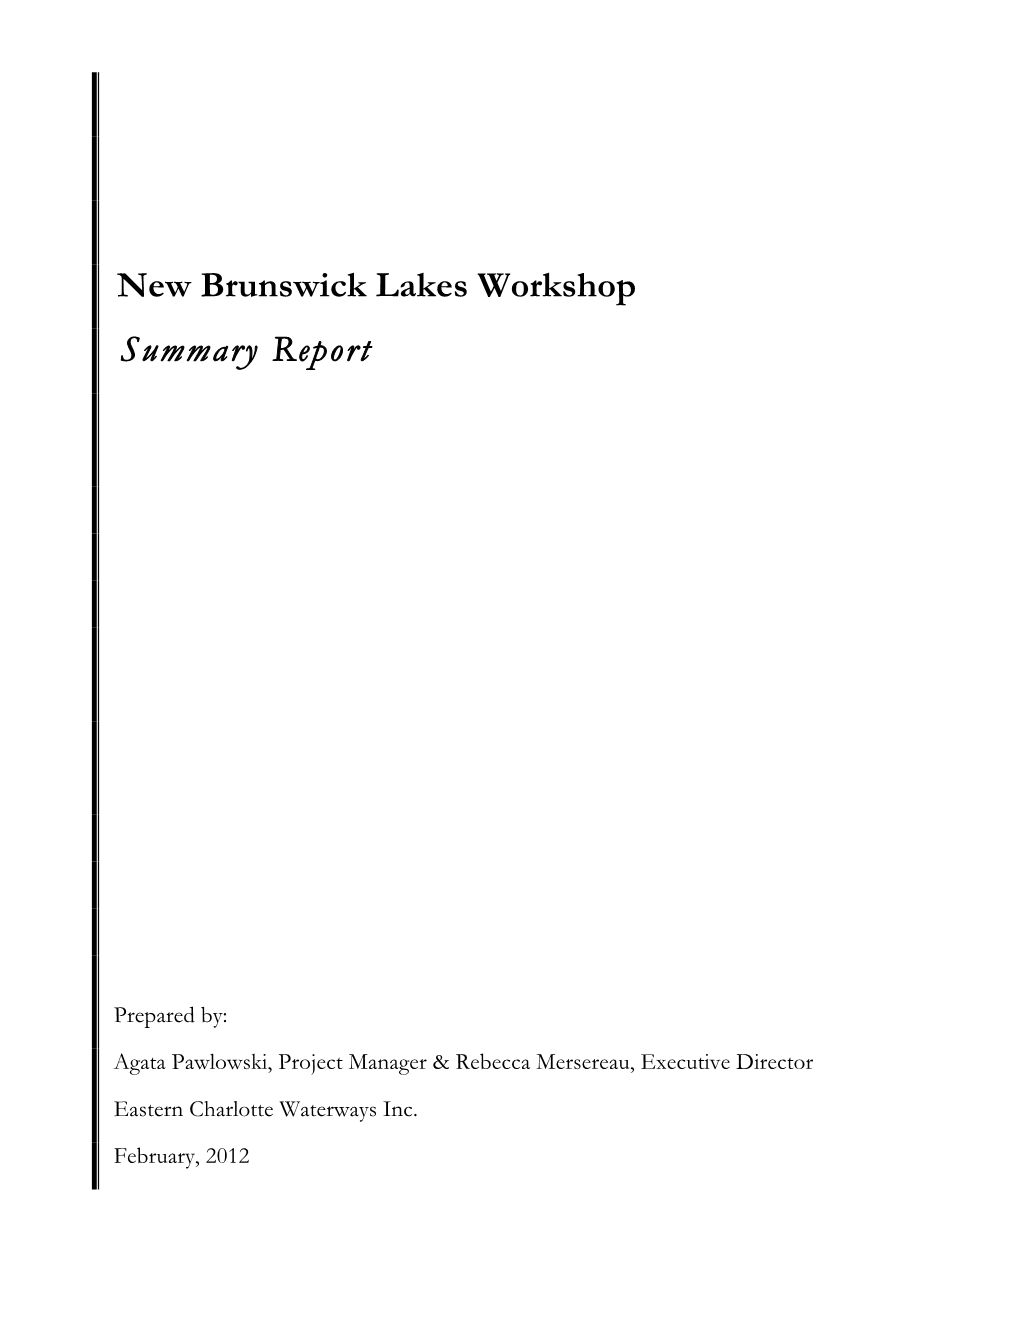 New Brunswick Lakes Workshop Summary Report